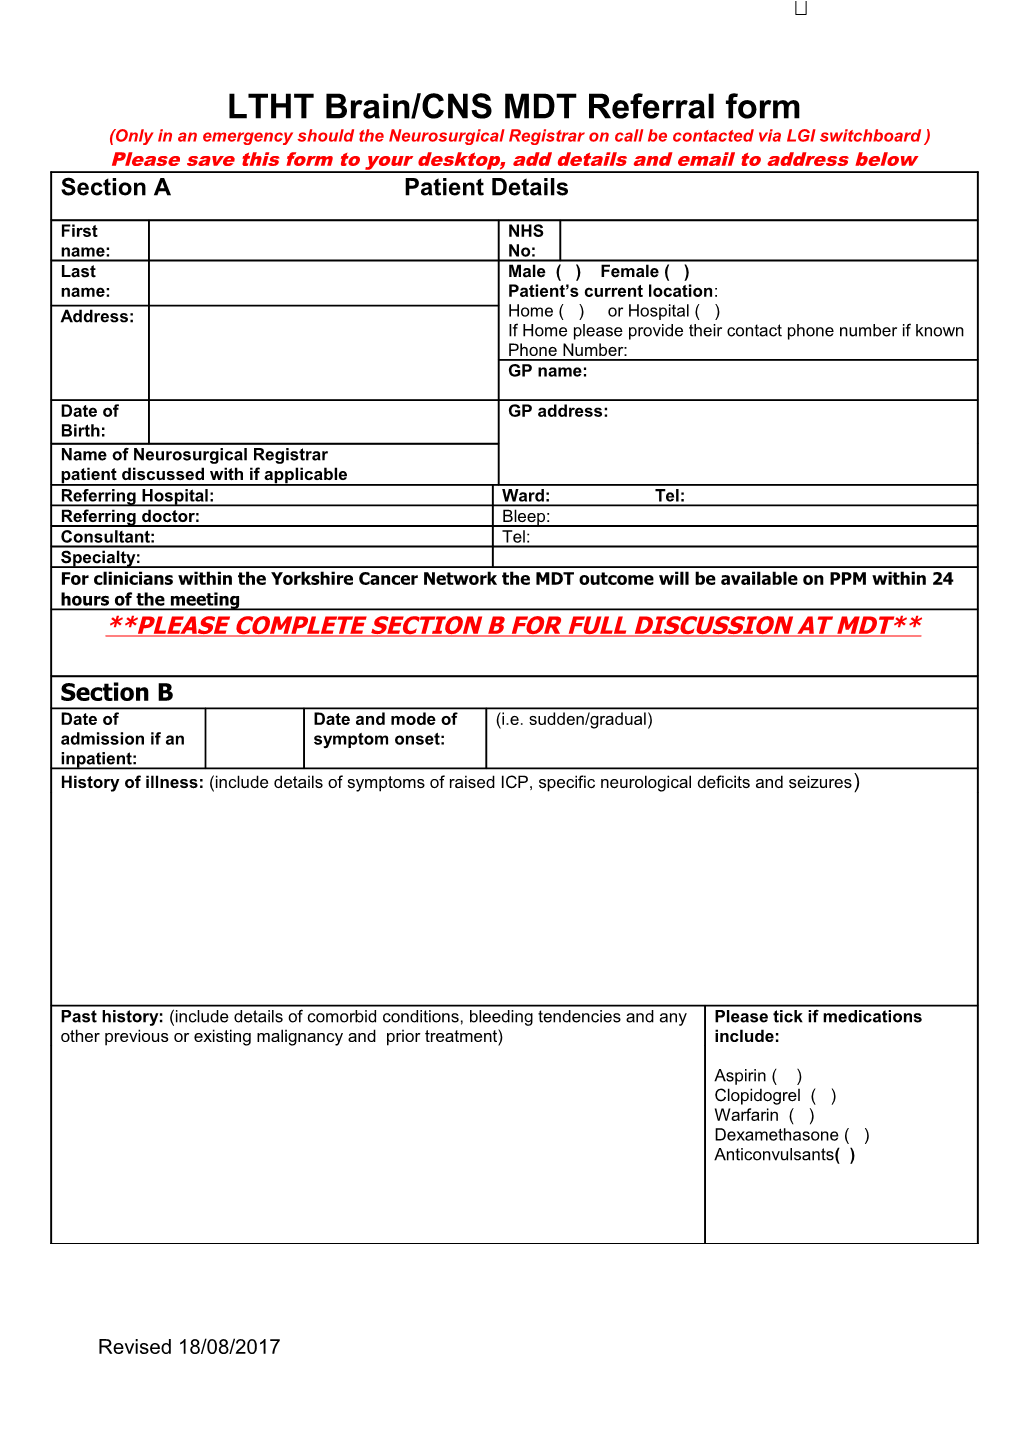 LTHT/YCNN Euroscience MDT Registration / Or Referral Form